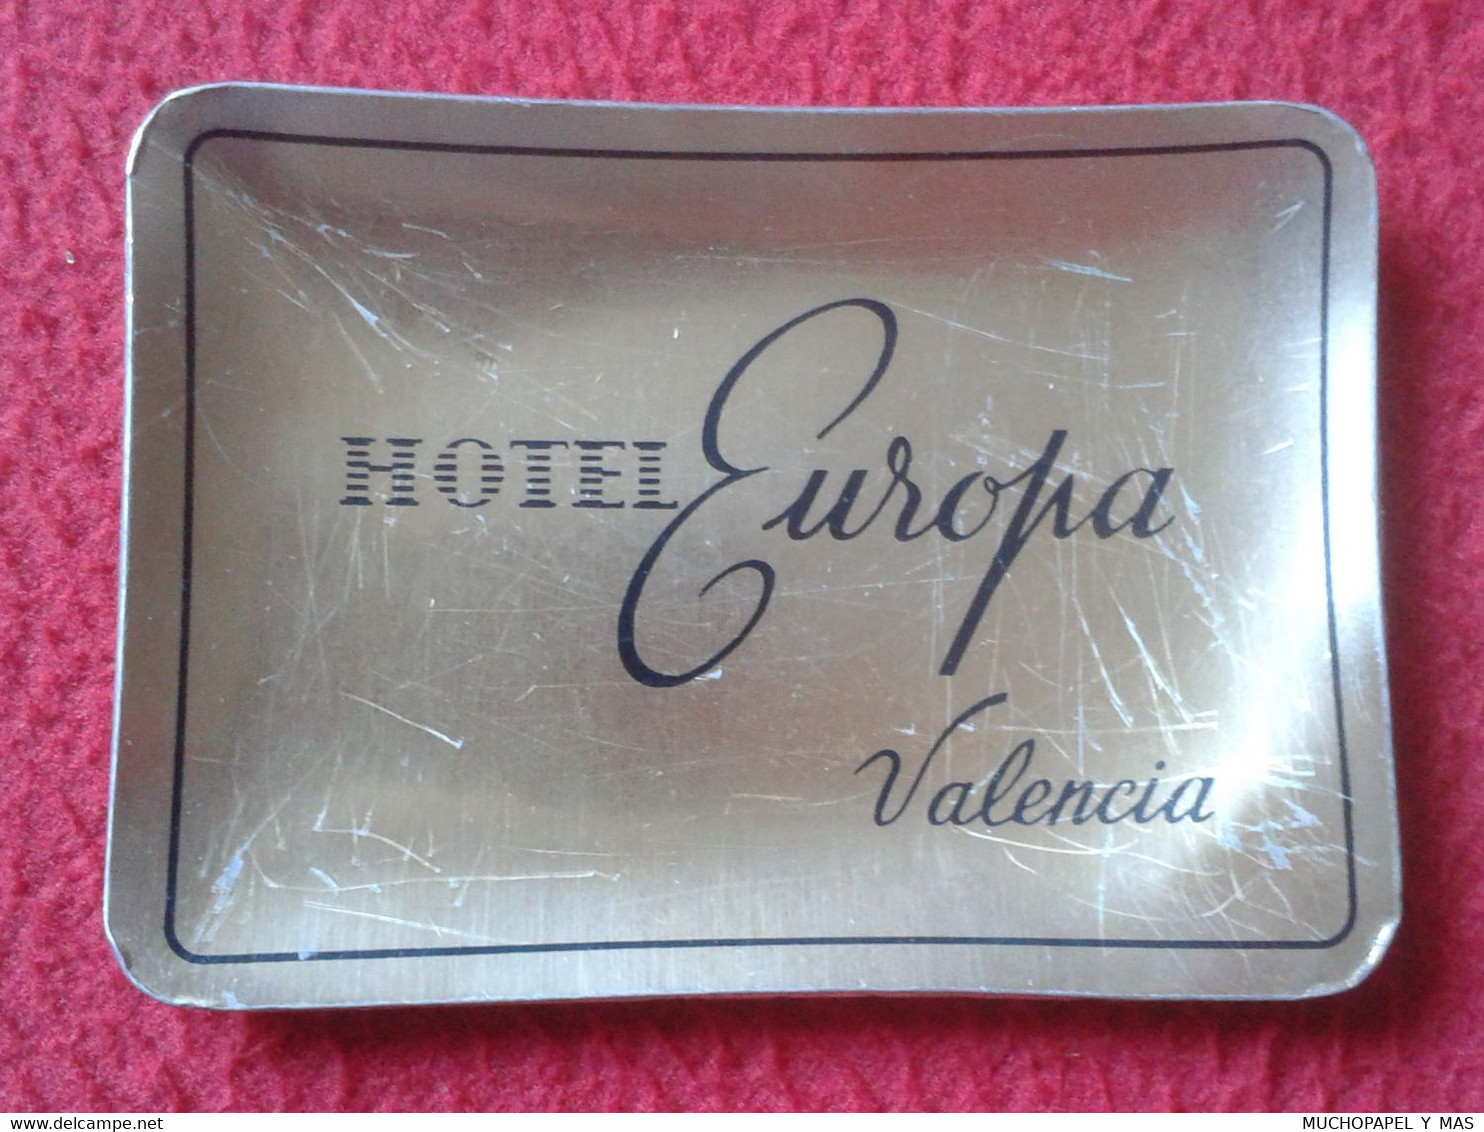 ANTIGUO CENICERO ASHTRAY CENDRIER HOTEL EUROPA VALENCIA ESPAÑA SPAIN MATERIAL TIPO ALUMINIO O SIMIL ASCHENBECHER ESPAGNE - Metaal